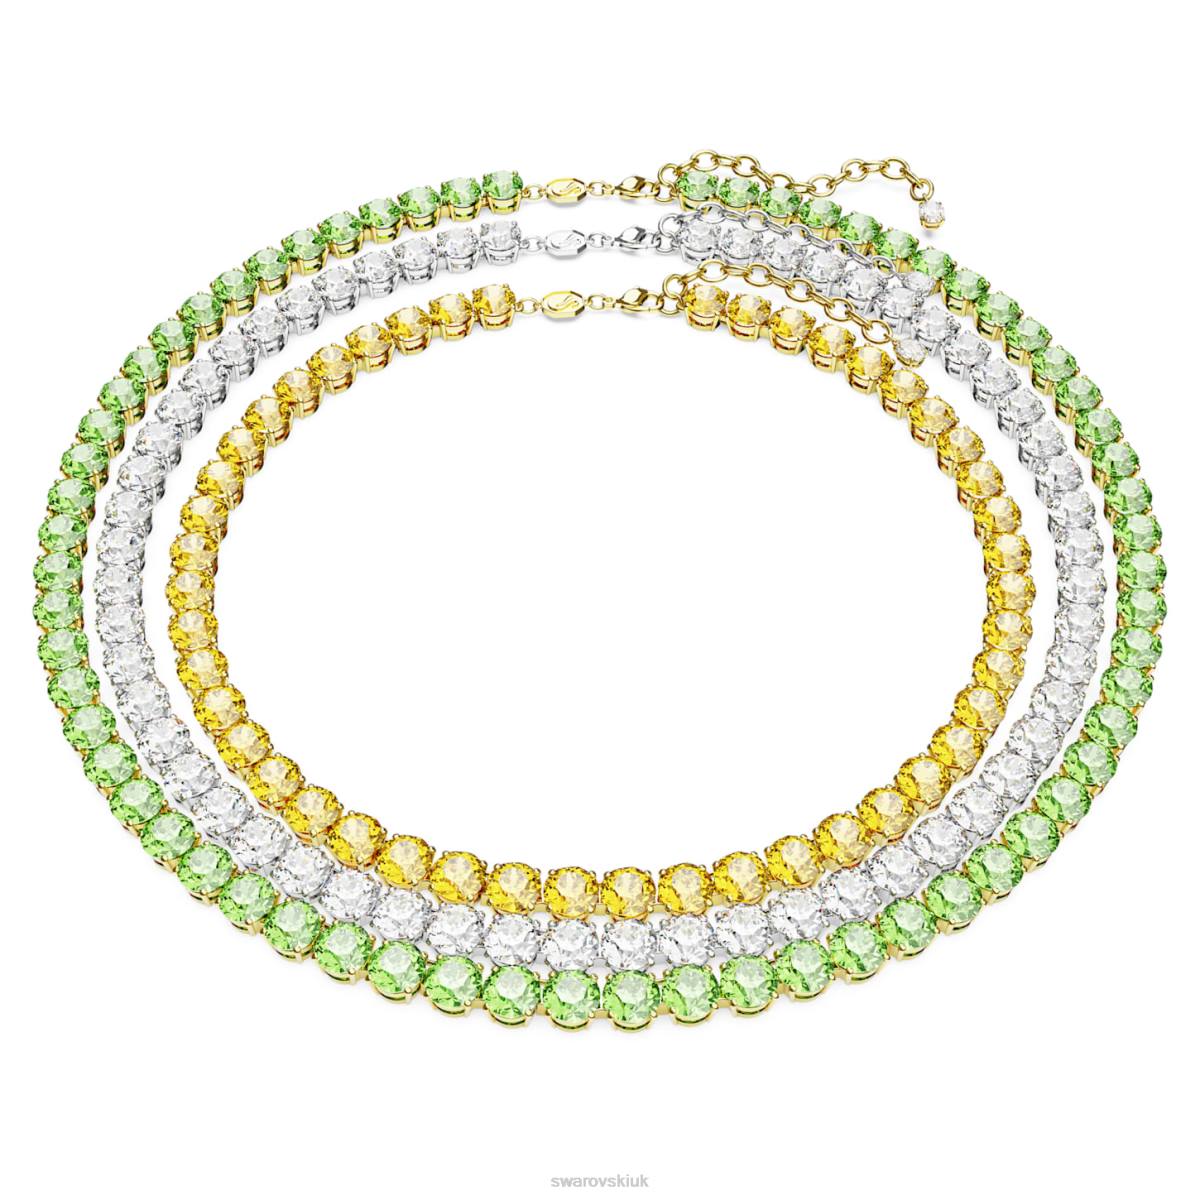 Jewelry Swarovski Matrix Tennis necklace Round cut, Multicolored, Mixed metal finish 48JX140